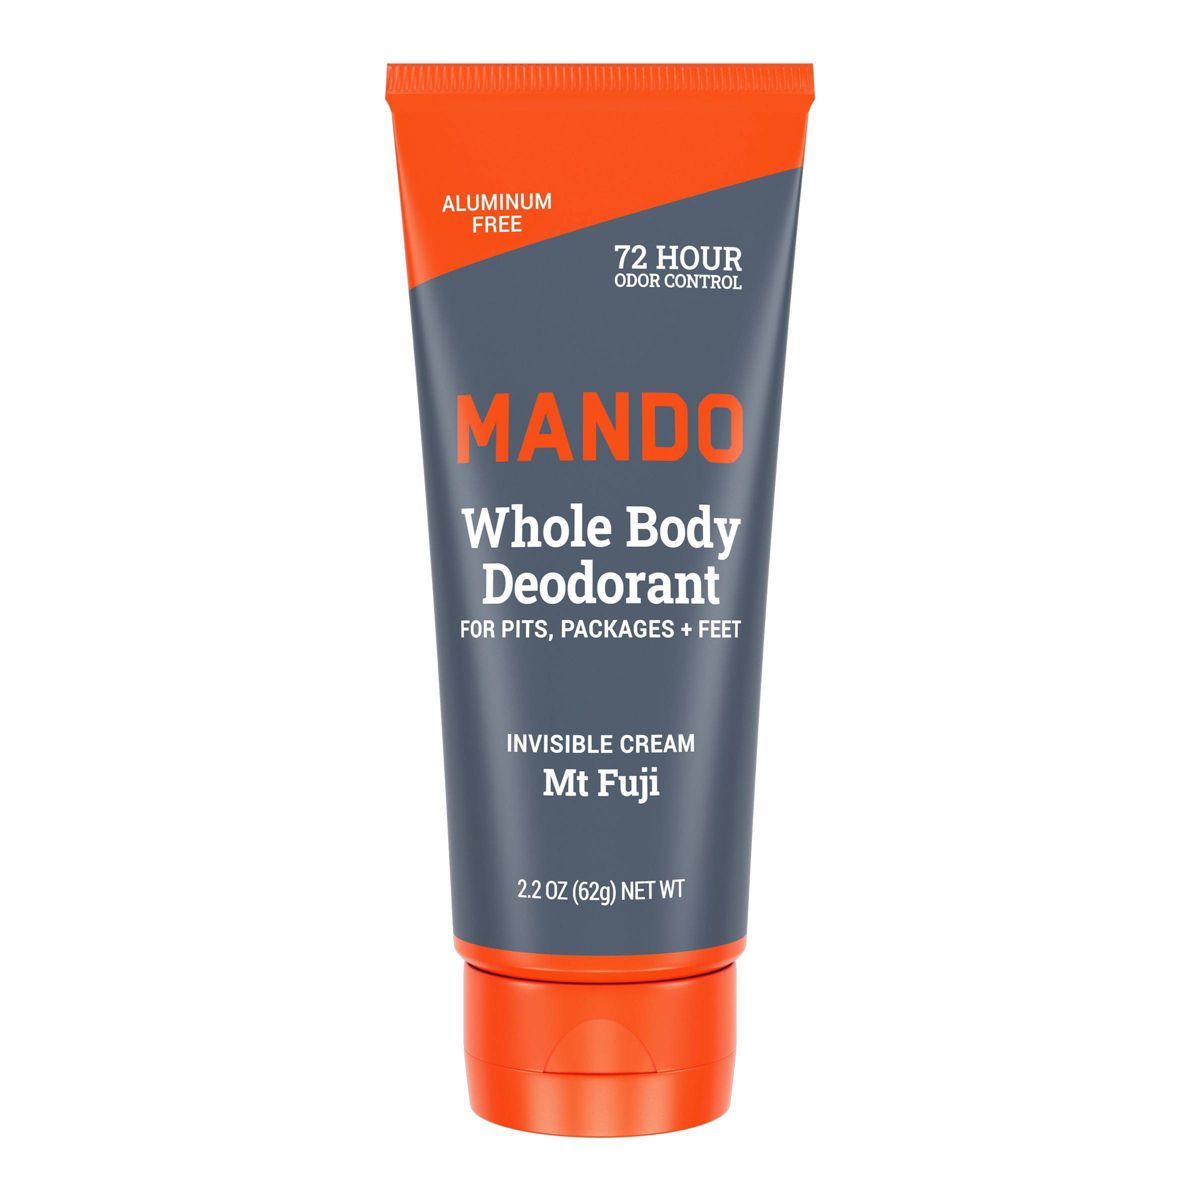 Mando Whole Body Deodorant - Invisible Cream Deodorant  - Mt Fuji - Trial Size - 2.2oz | Target